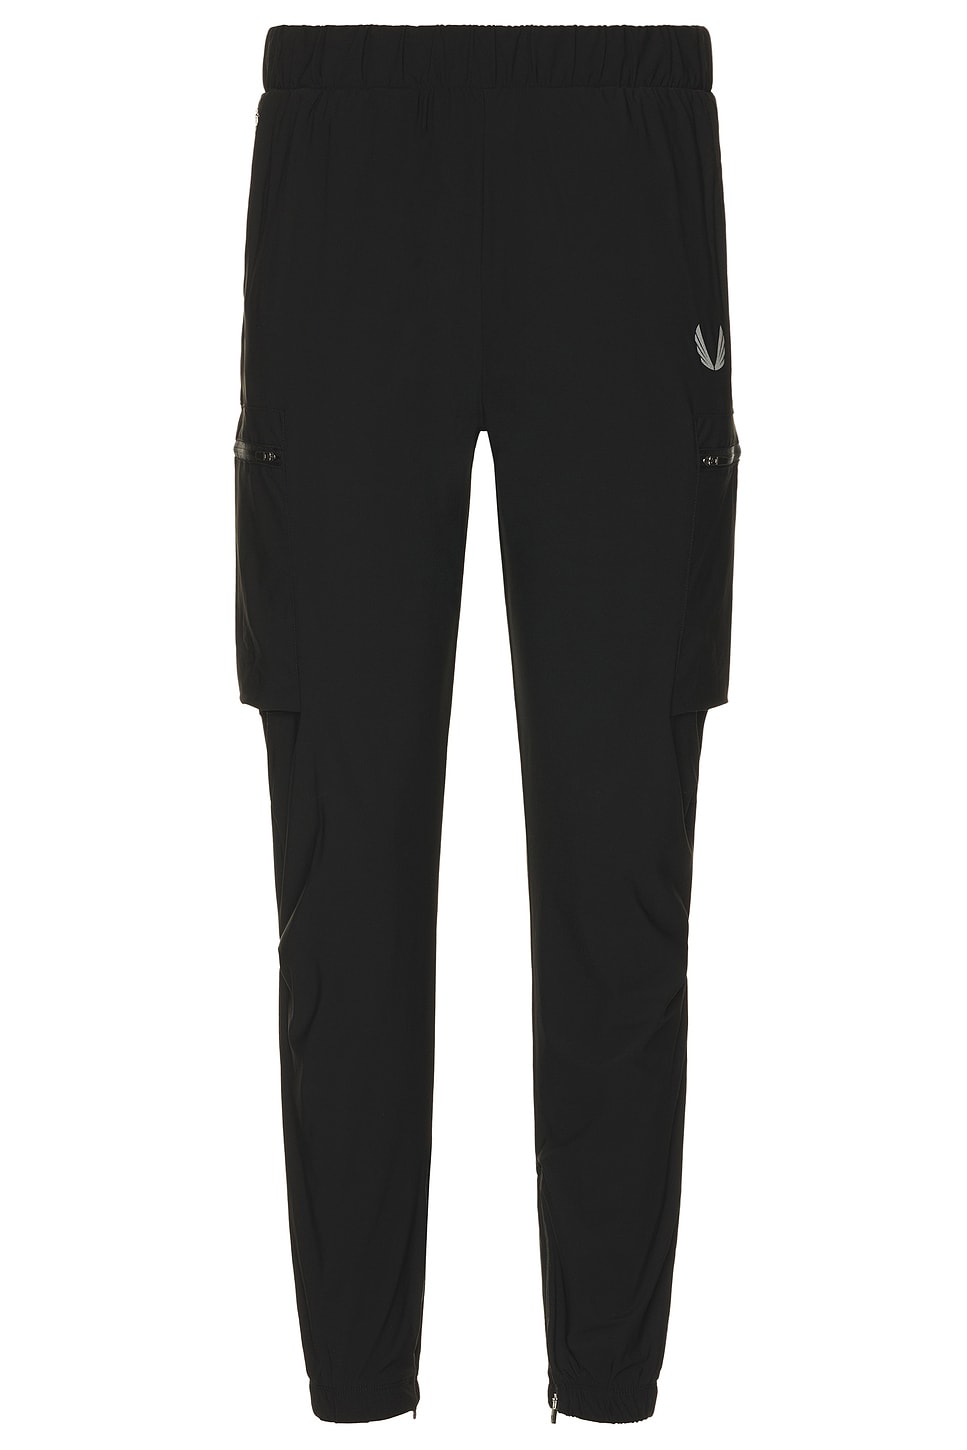 Tetra Lite Standard Zip Jogger in Black